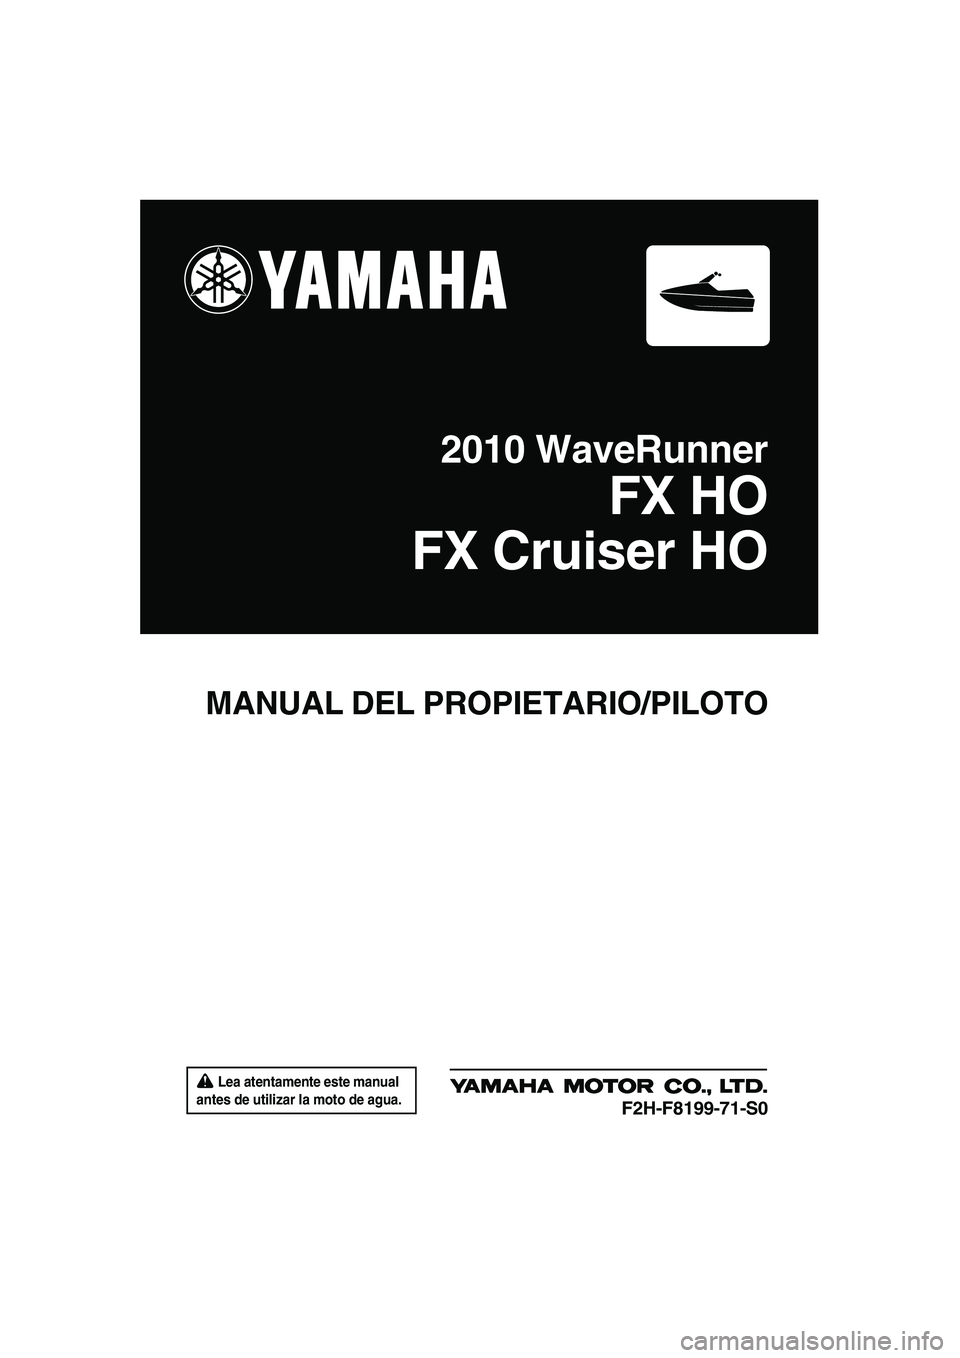 YAMAHA FX HO CRUISER 2010  Manuale de Empleo (in Spanish)  Lea atentamente este manual 
antes de utilizar la moto de agua.
MANUAL DEL PROPIETARIO/PILOTO
2010 WaveRunner
FX HO
FX Cruiser HO
F2H-F8199-71-S0
UF2H71S0.book  Page 1  Tuesday, July 7, 2009  12:56 P